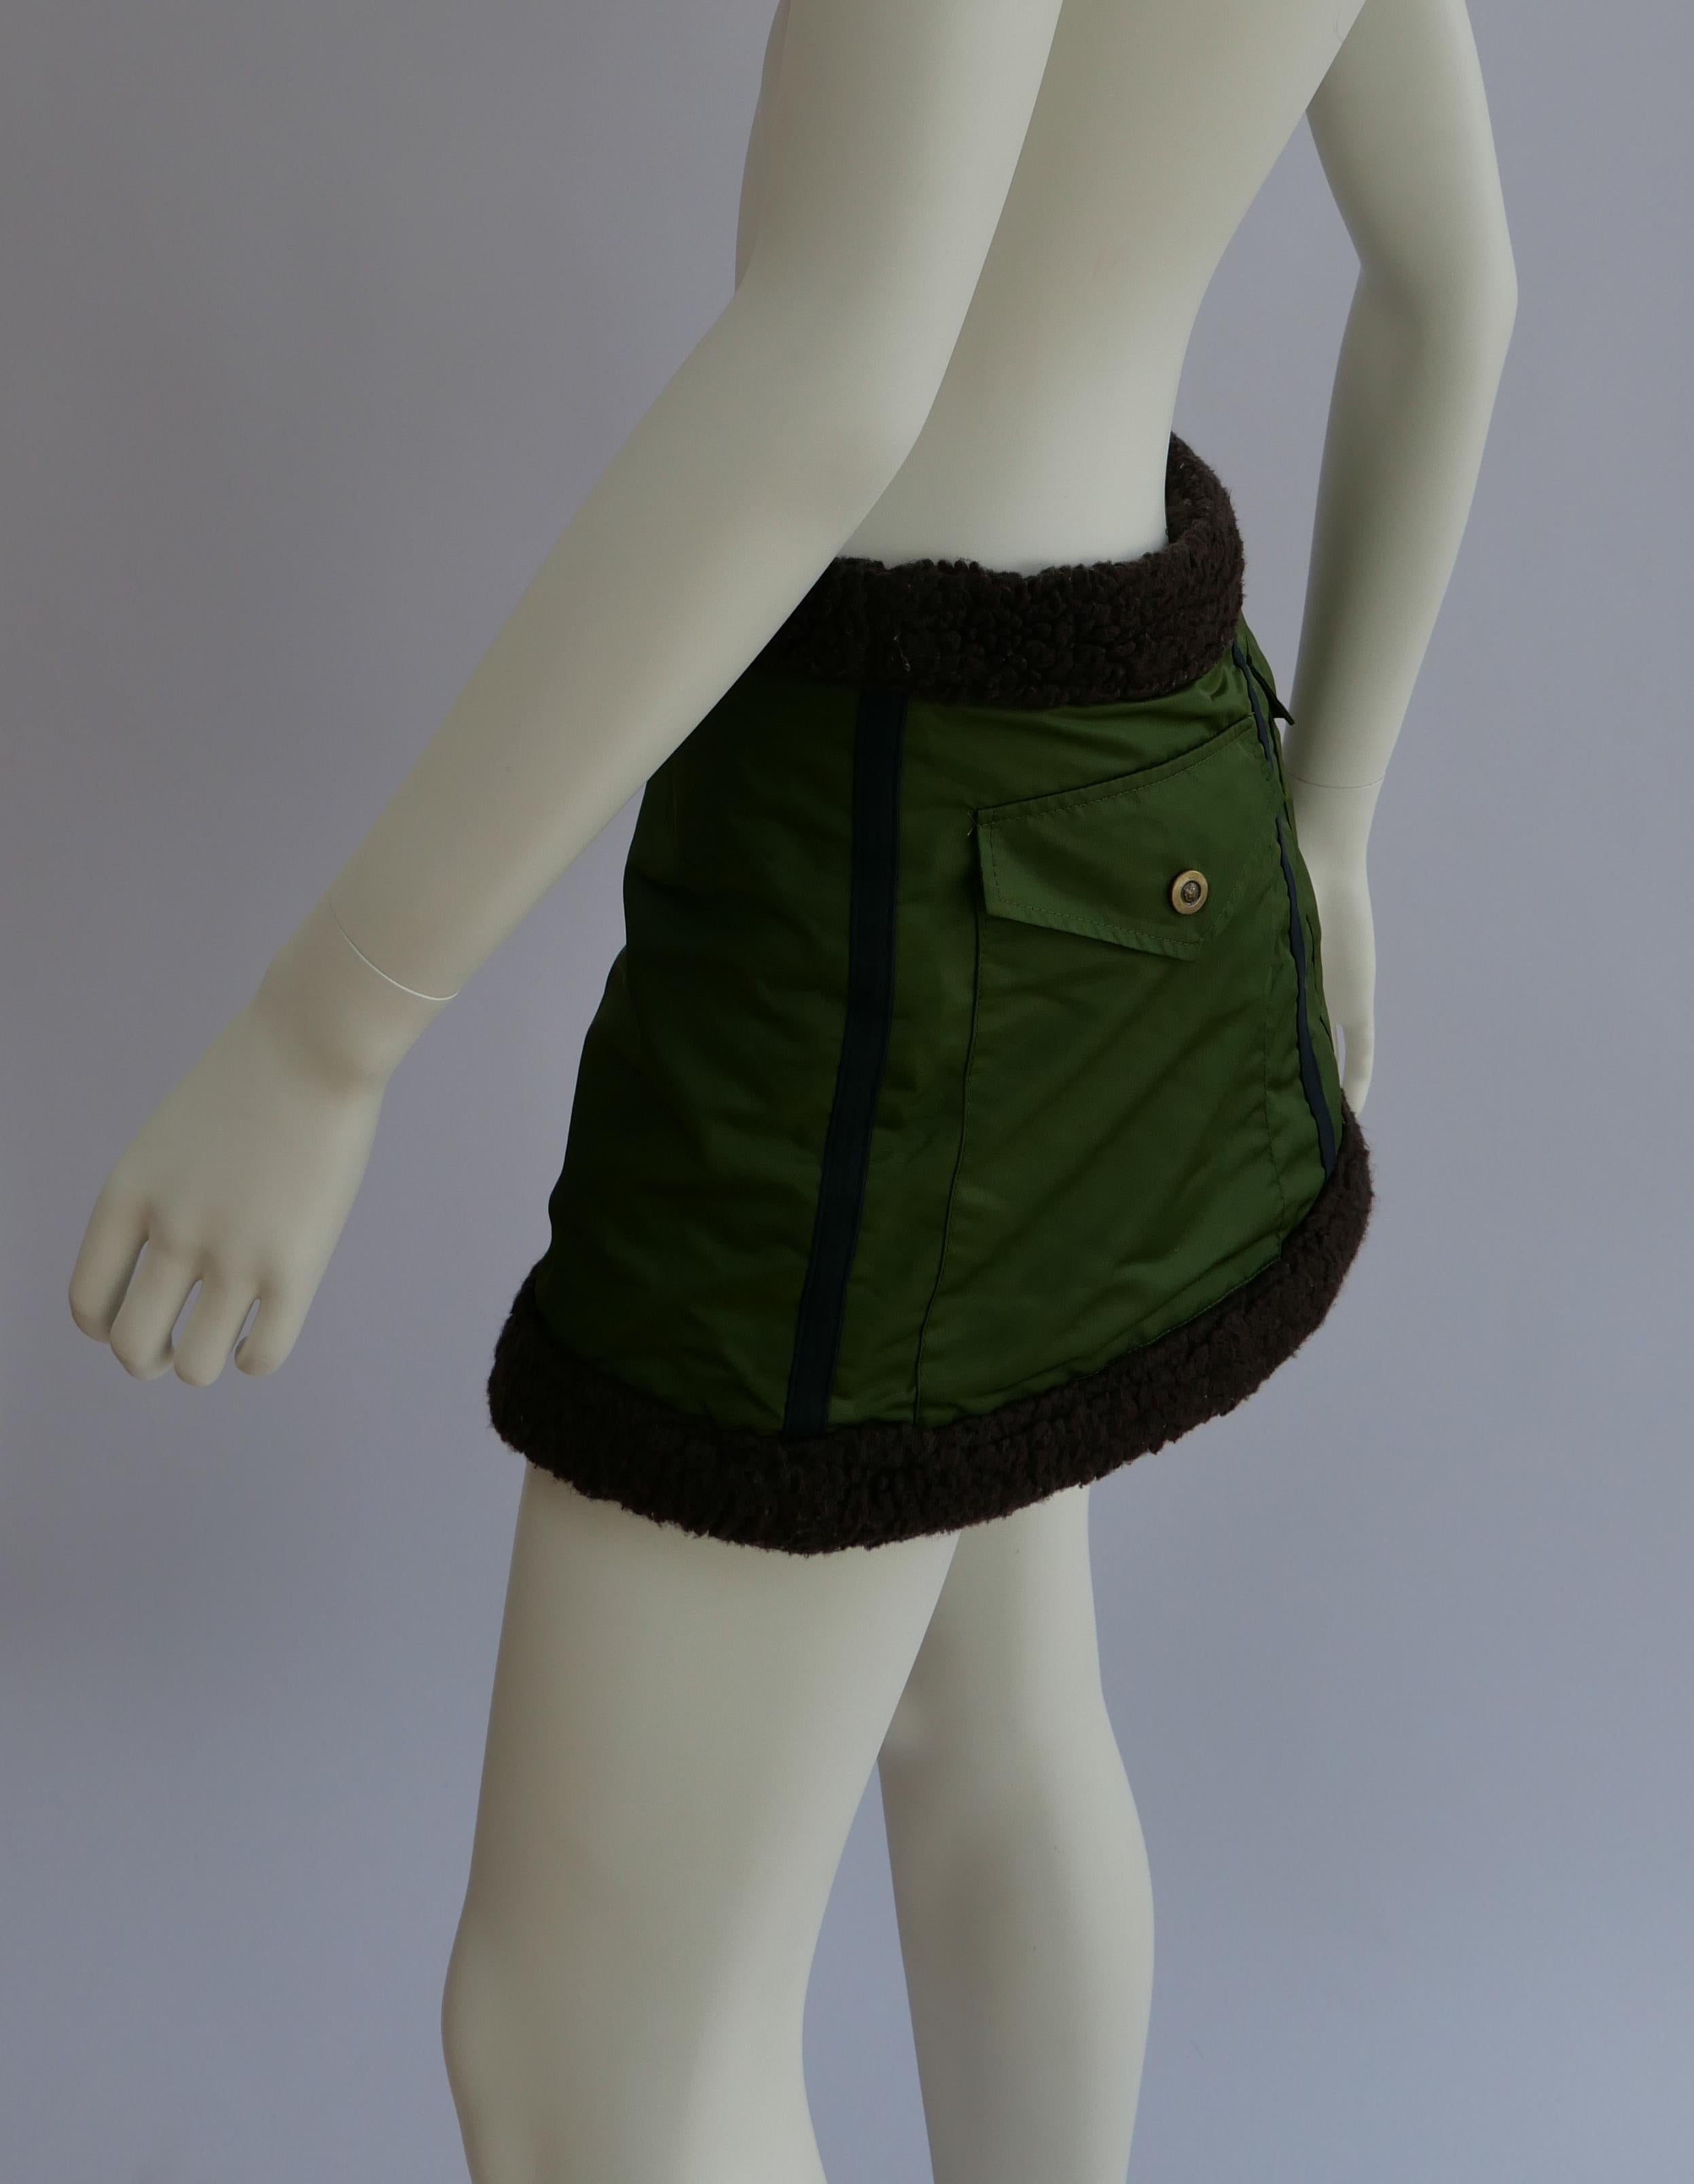 Jean Paul Gaultier Mini Skirt with Wool Lining 3